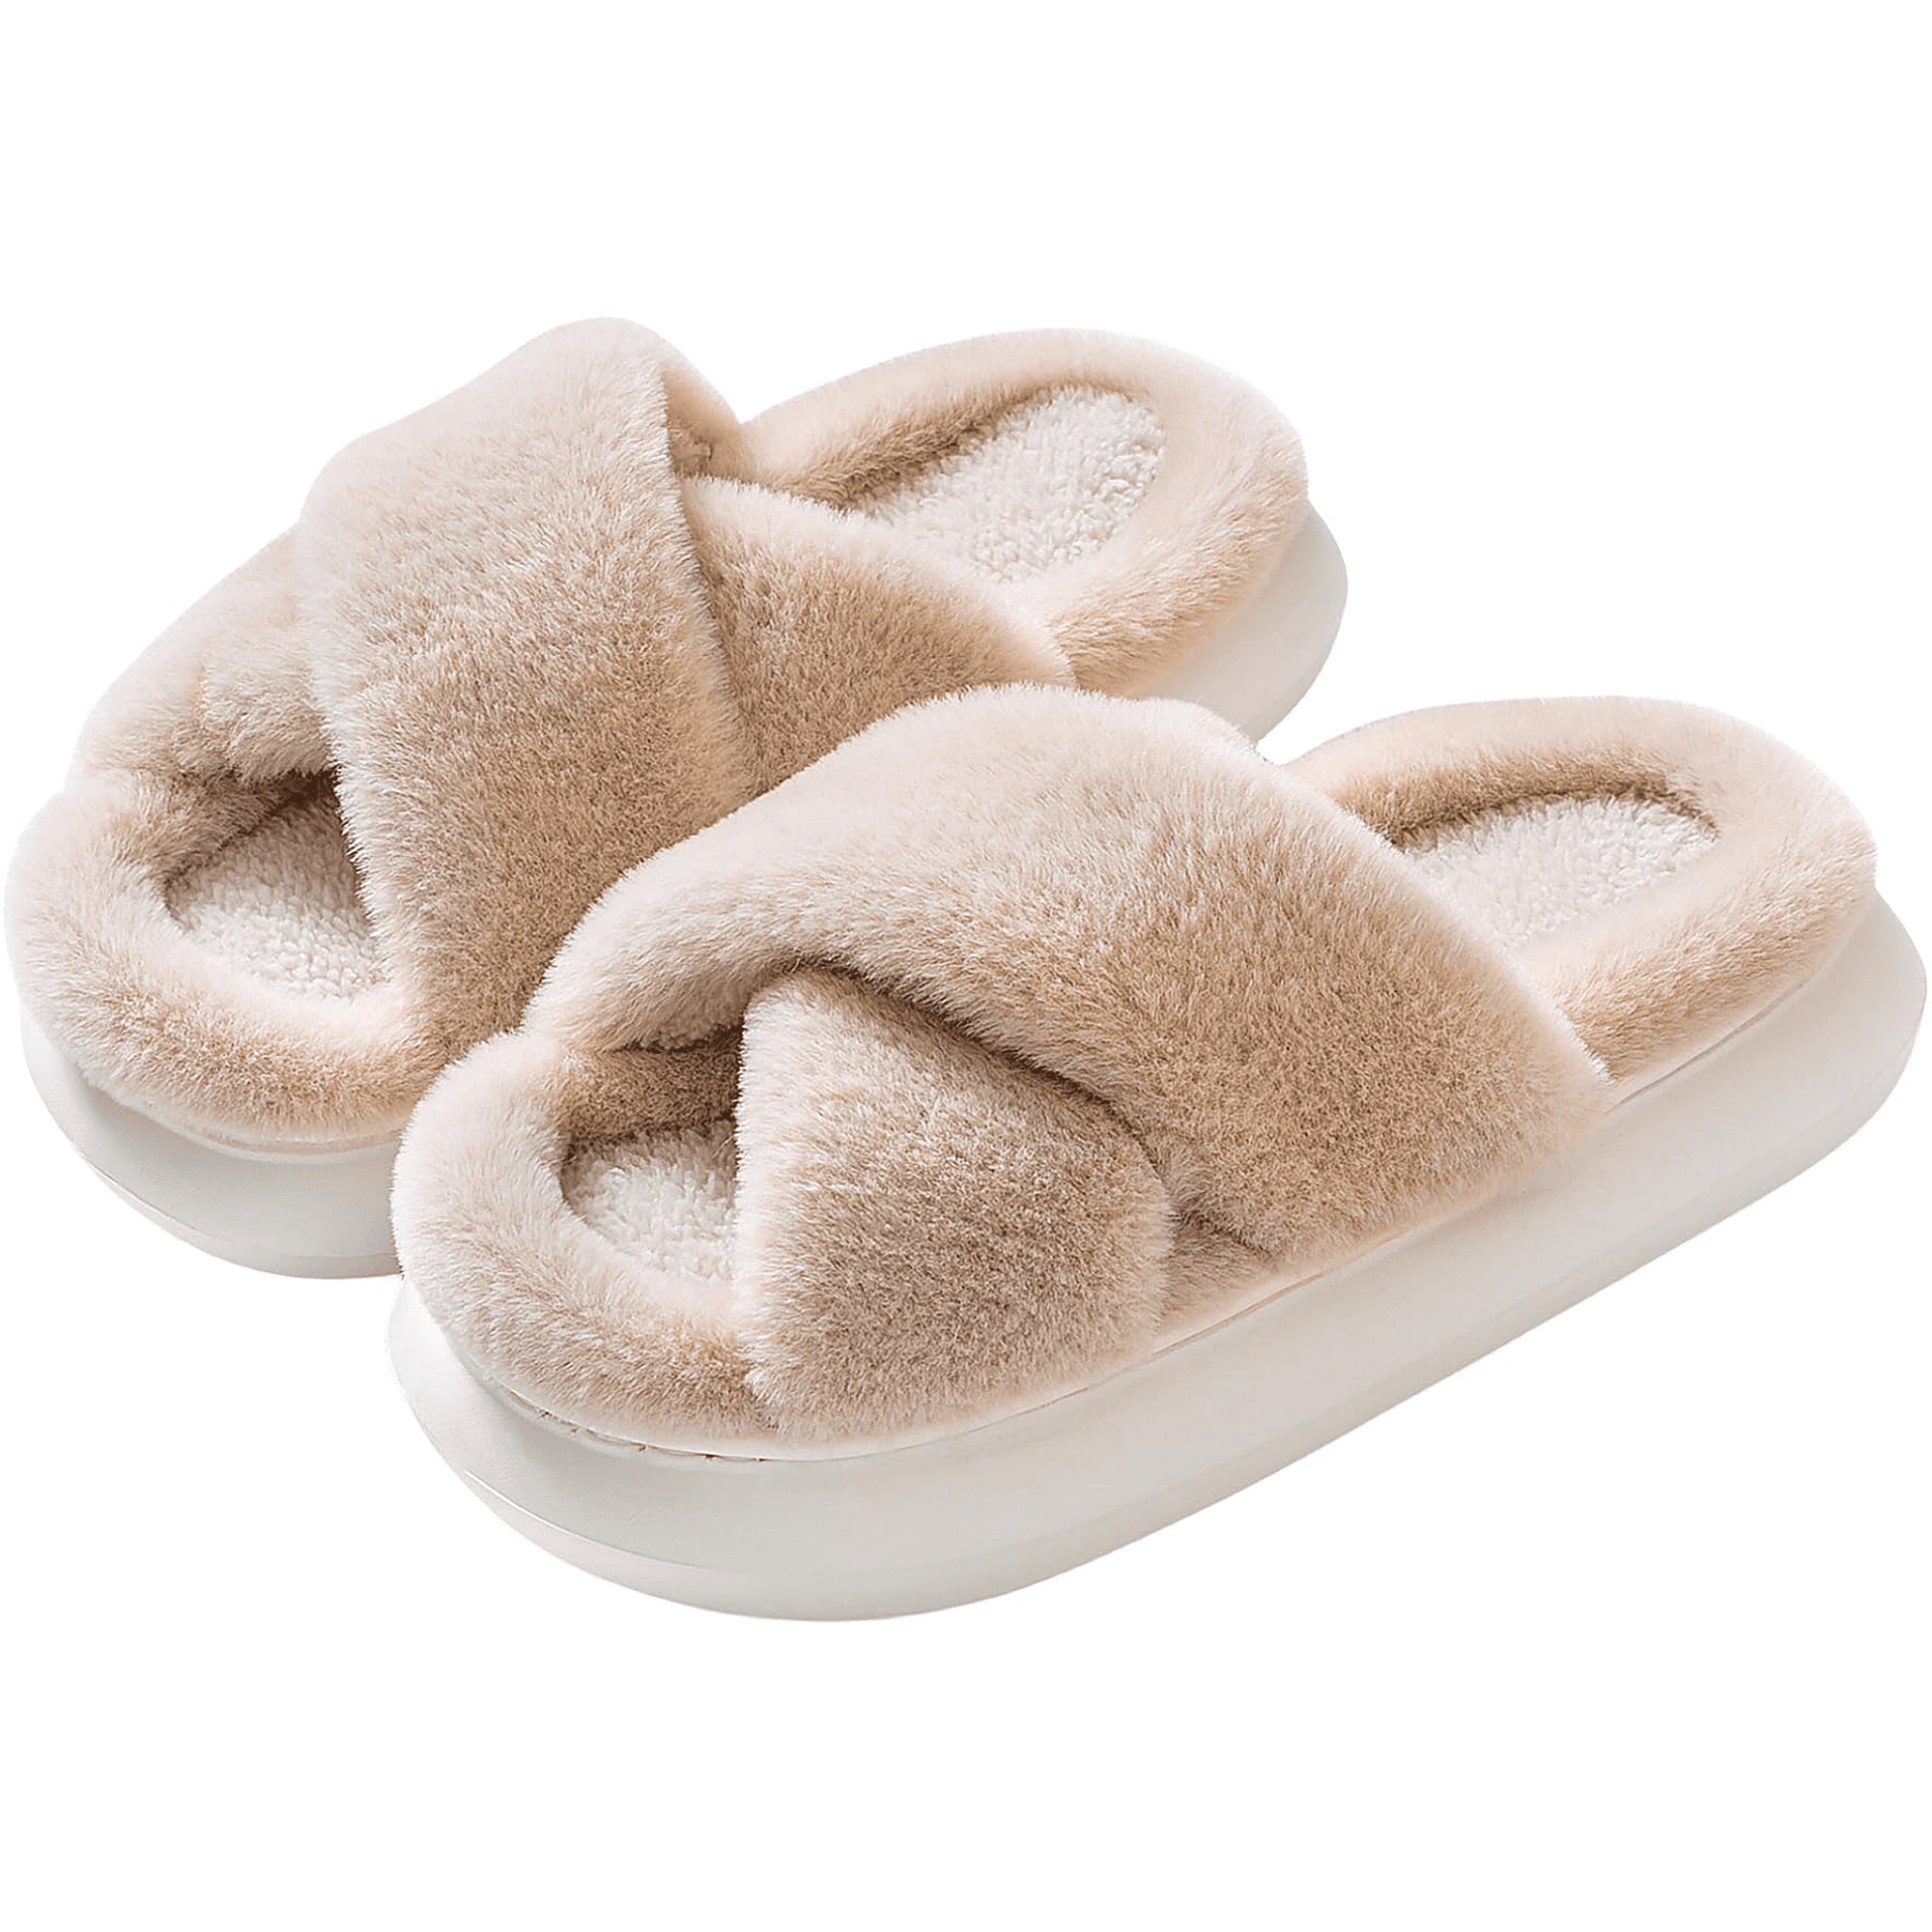 YAZI Cute Animal House Slippers for Women, Cozy Memory Foam Mens Slippers  Soft Warm Slip, Anti-Skid Rubber Sole,Creative Gifts for Women Mom  Girlfriend 